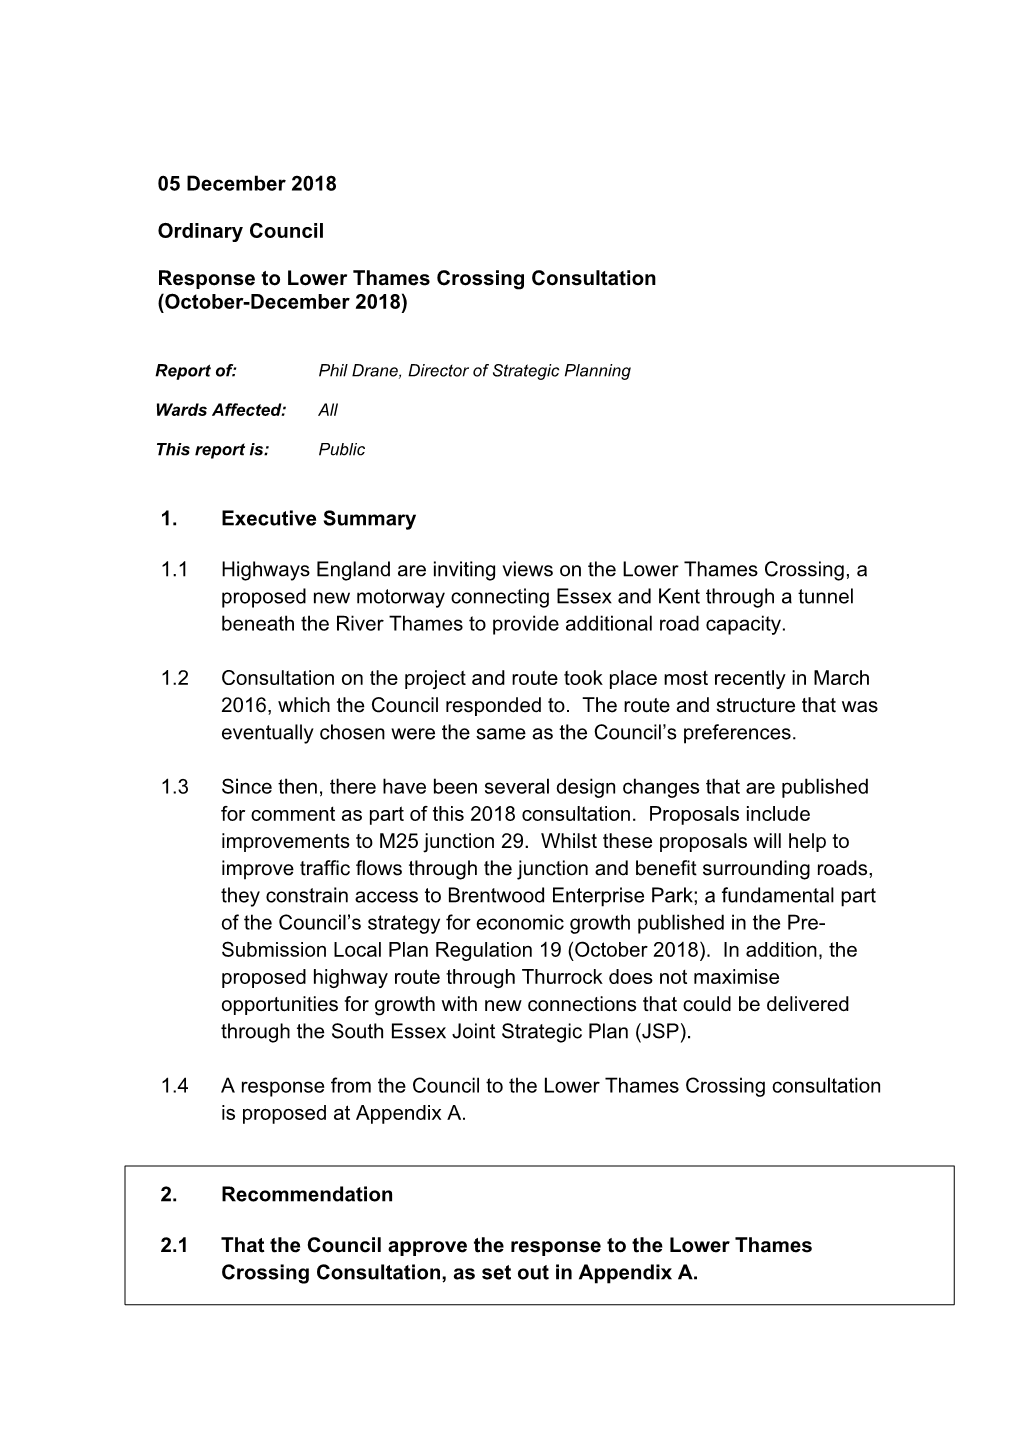 Response to Lower Thames Crossing Consultation (October-December 2018)